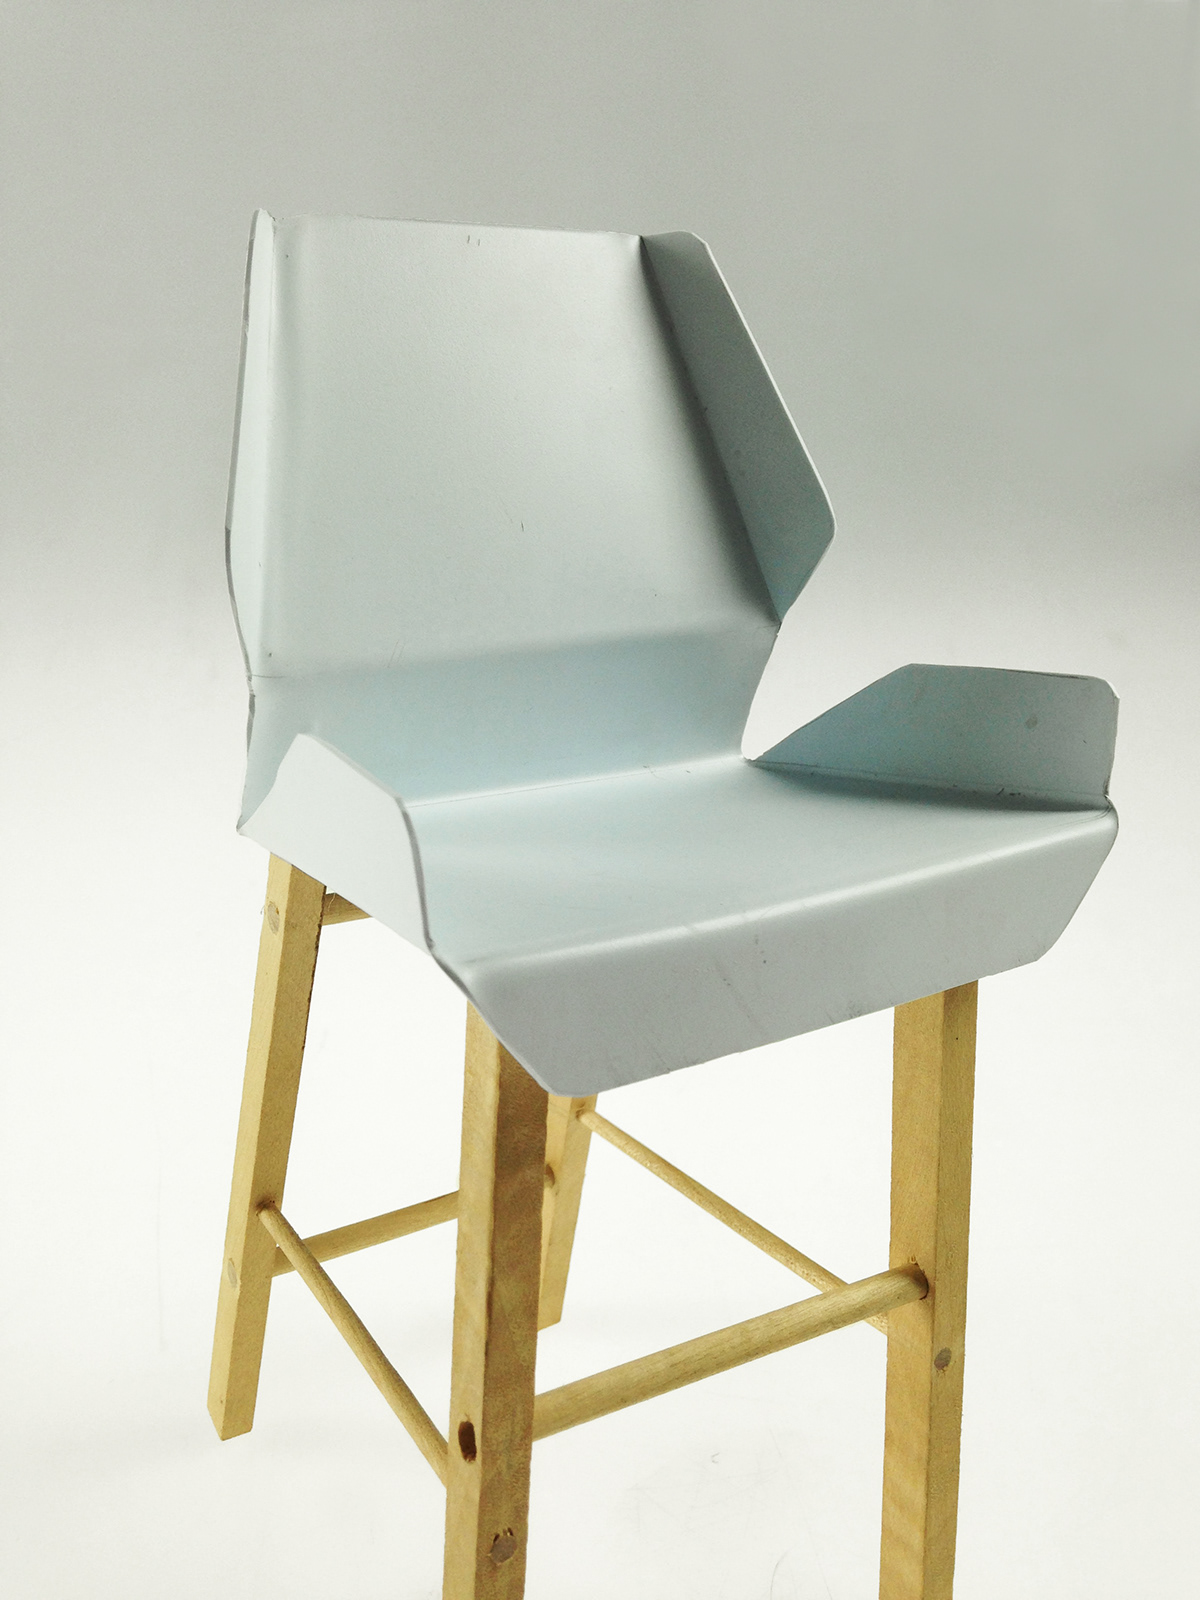 model making comfort uncomfortable furniture industrial design wood fellt plastic